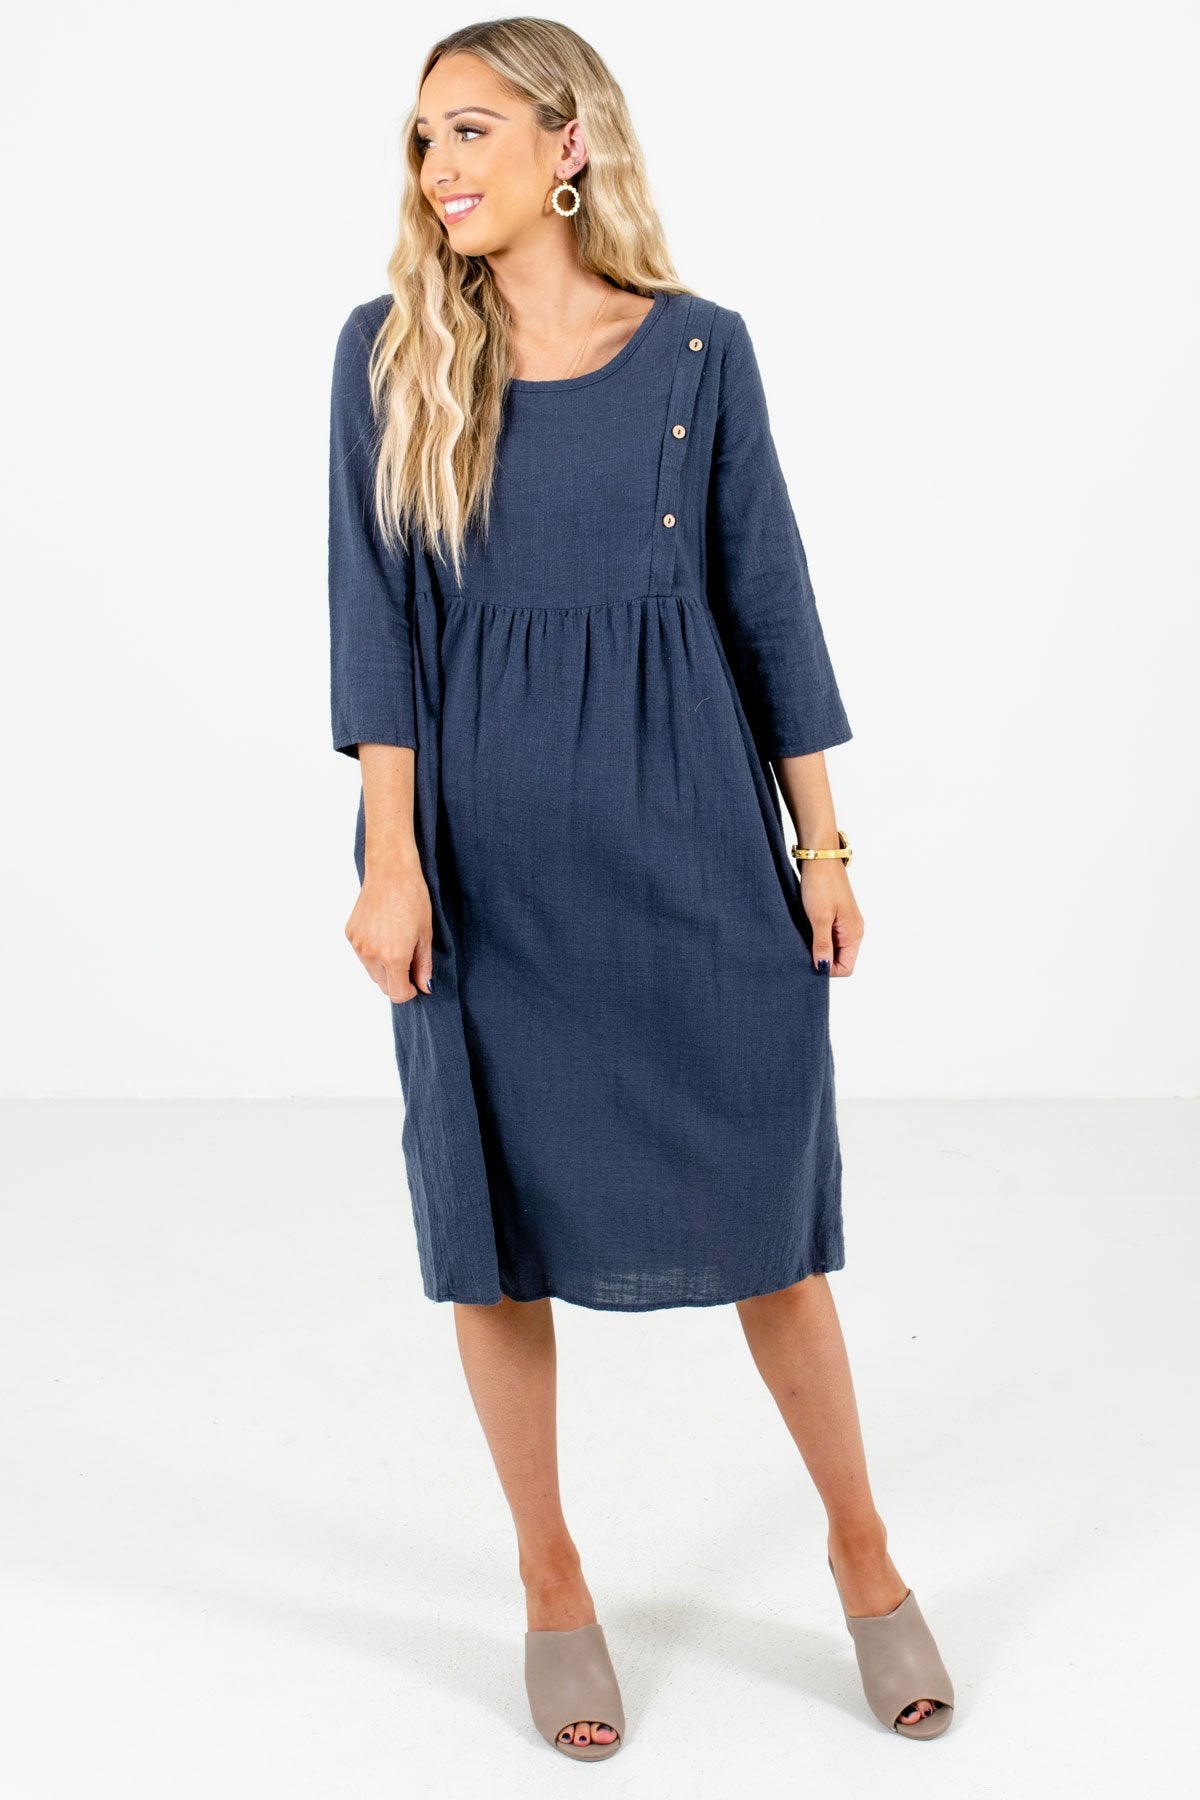 Women’s Blue Casual Everyday Boutique Knee-Length Dress